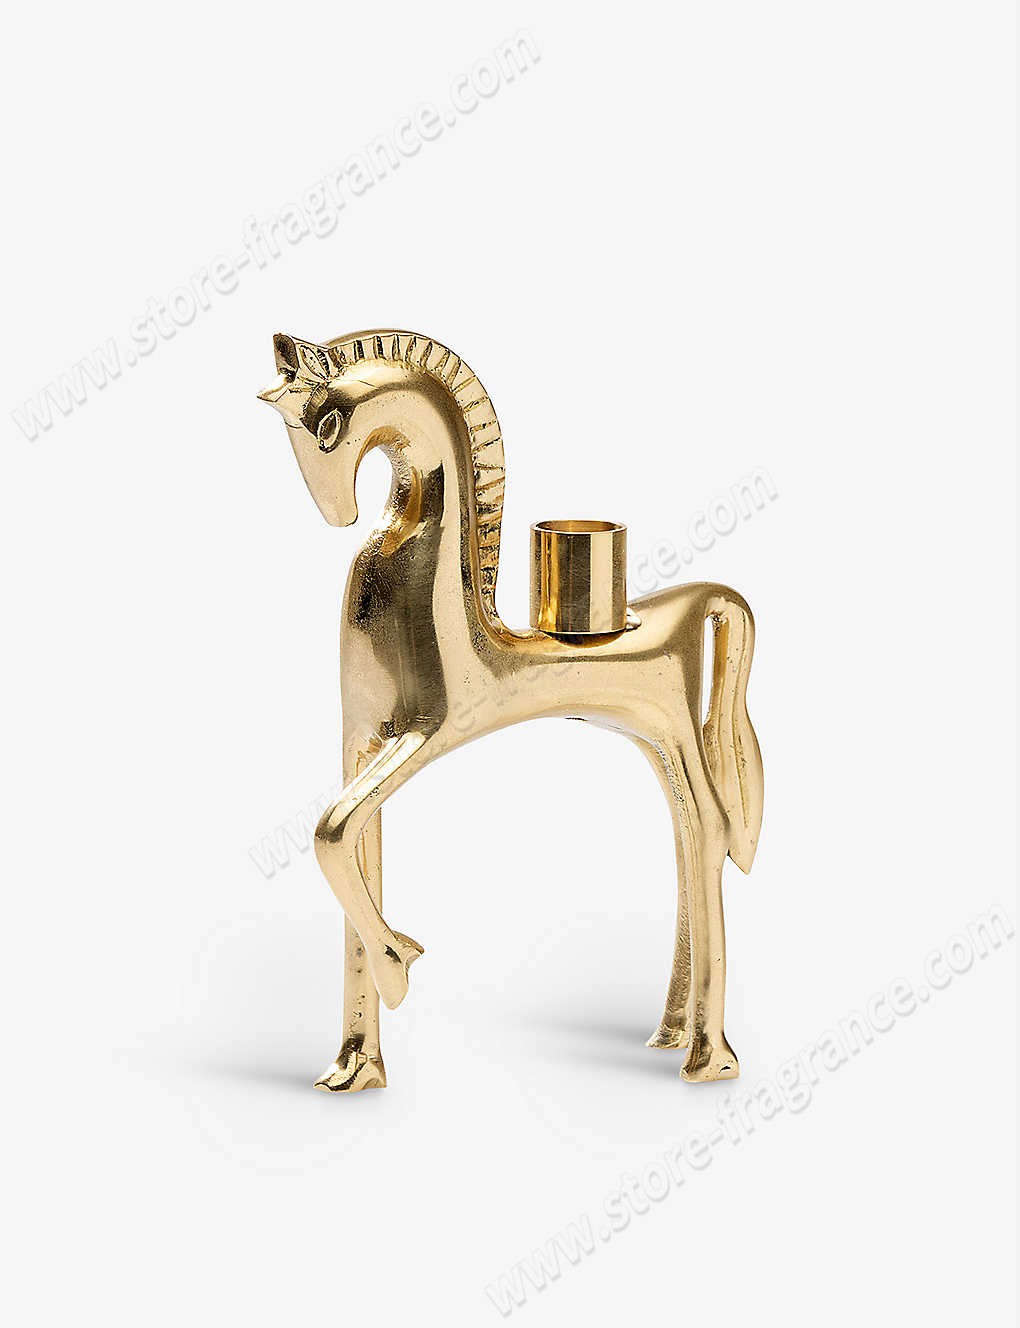 ANNA + NINA/Parade horse brass candleholder 20cm x 15cm ✿ Discount Store - ANNA + NINA/Parade horse brass candleholder 20cm x 15cm ✿ Discount Store